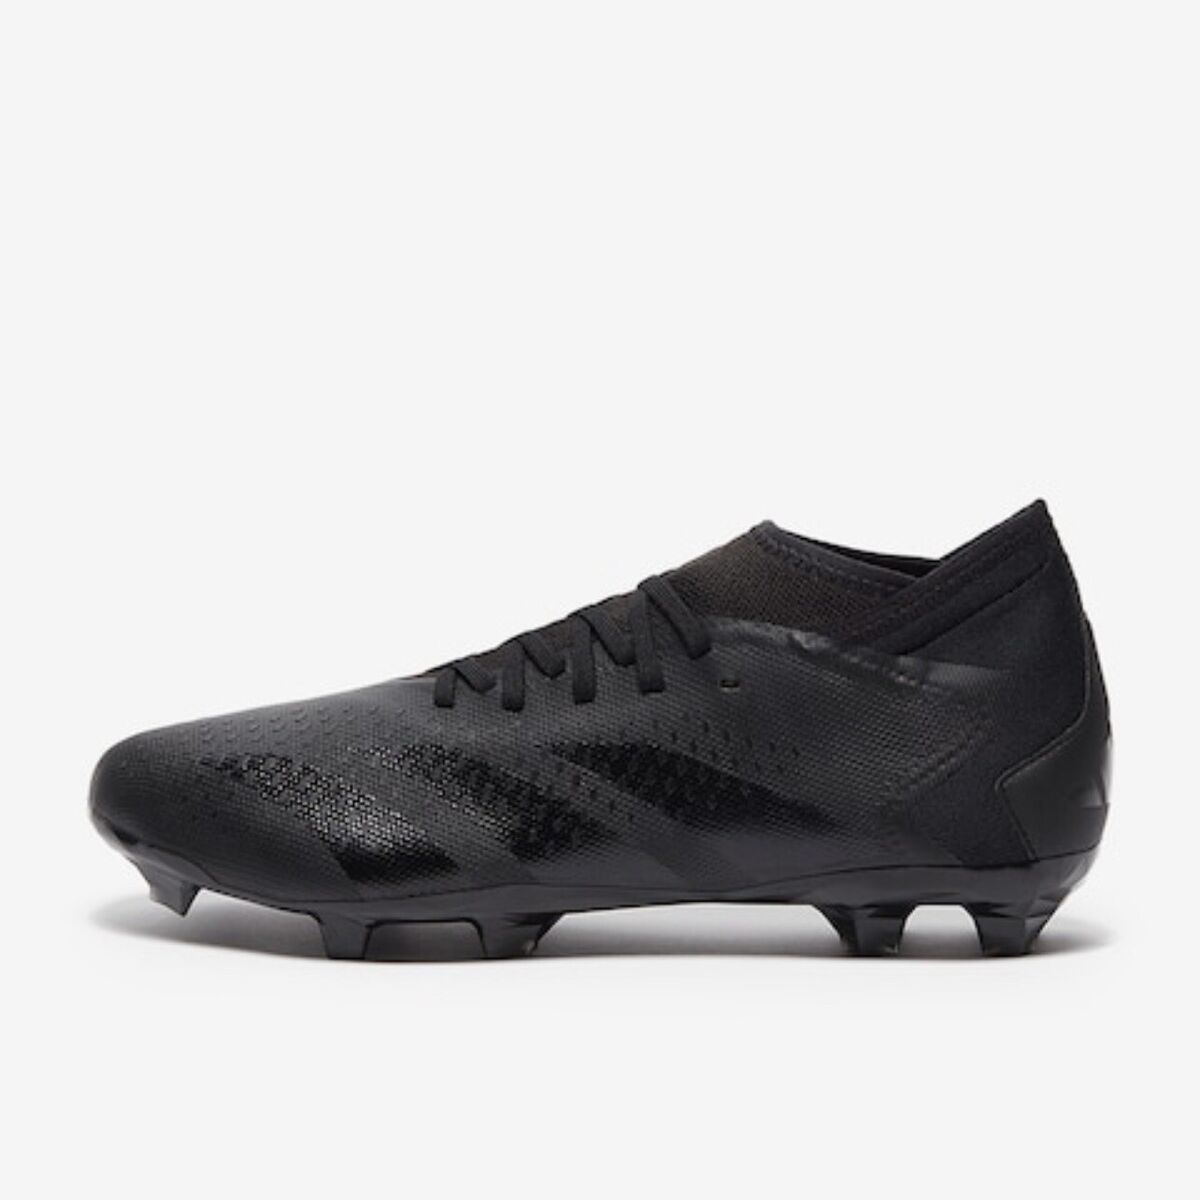 Cleats 3 Football #593 Soccer | Adidas Men\'s Shoe eBay Predator Black Accuracy FG